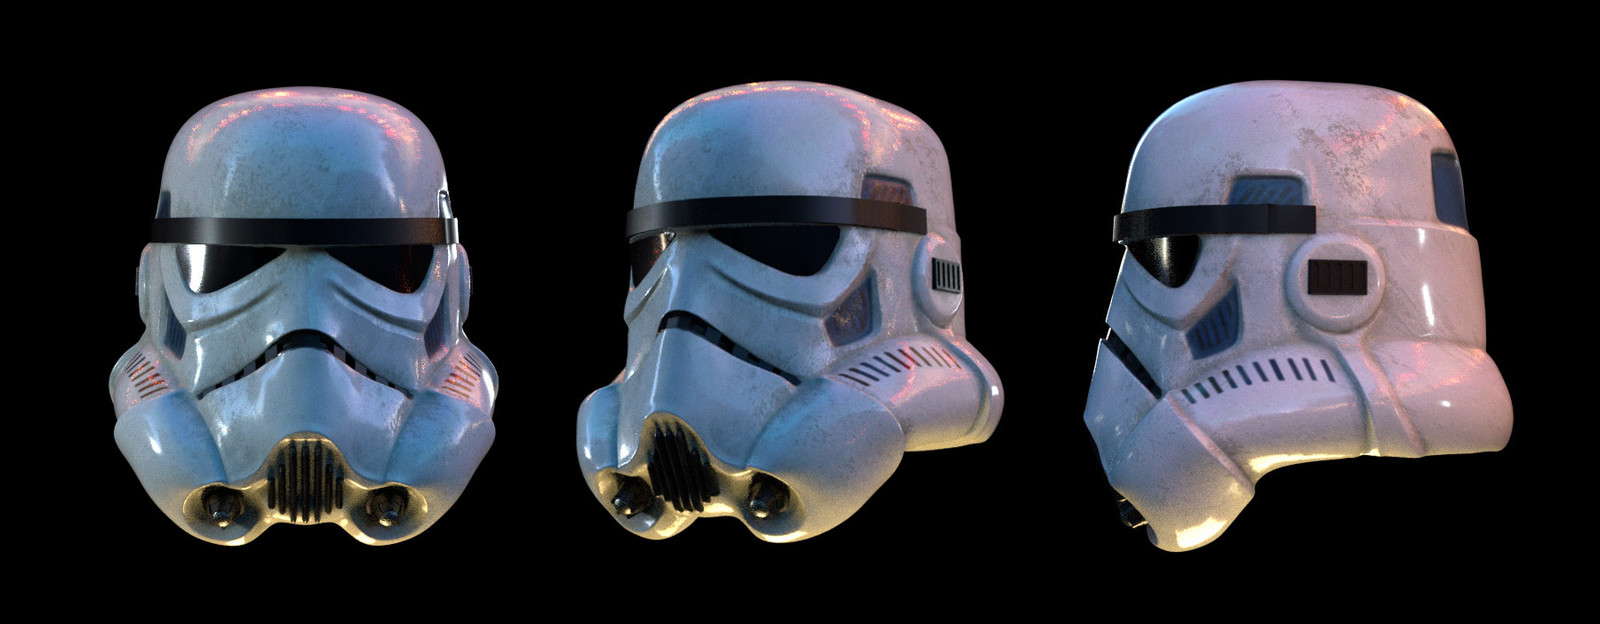 Storm trooper helmet render